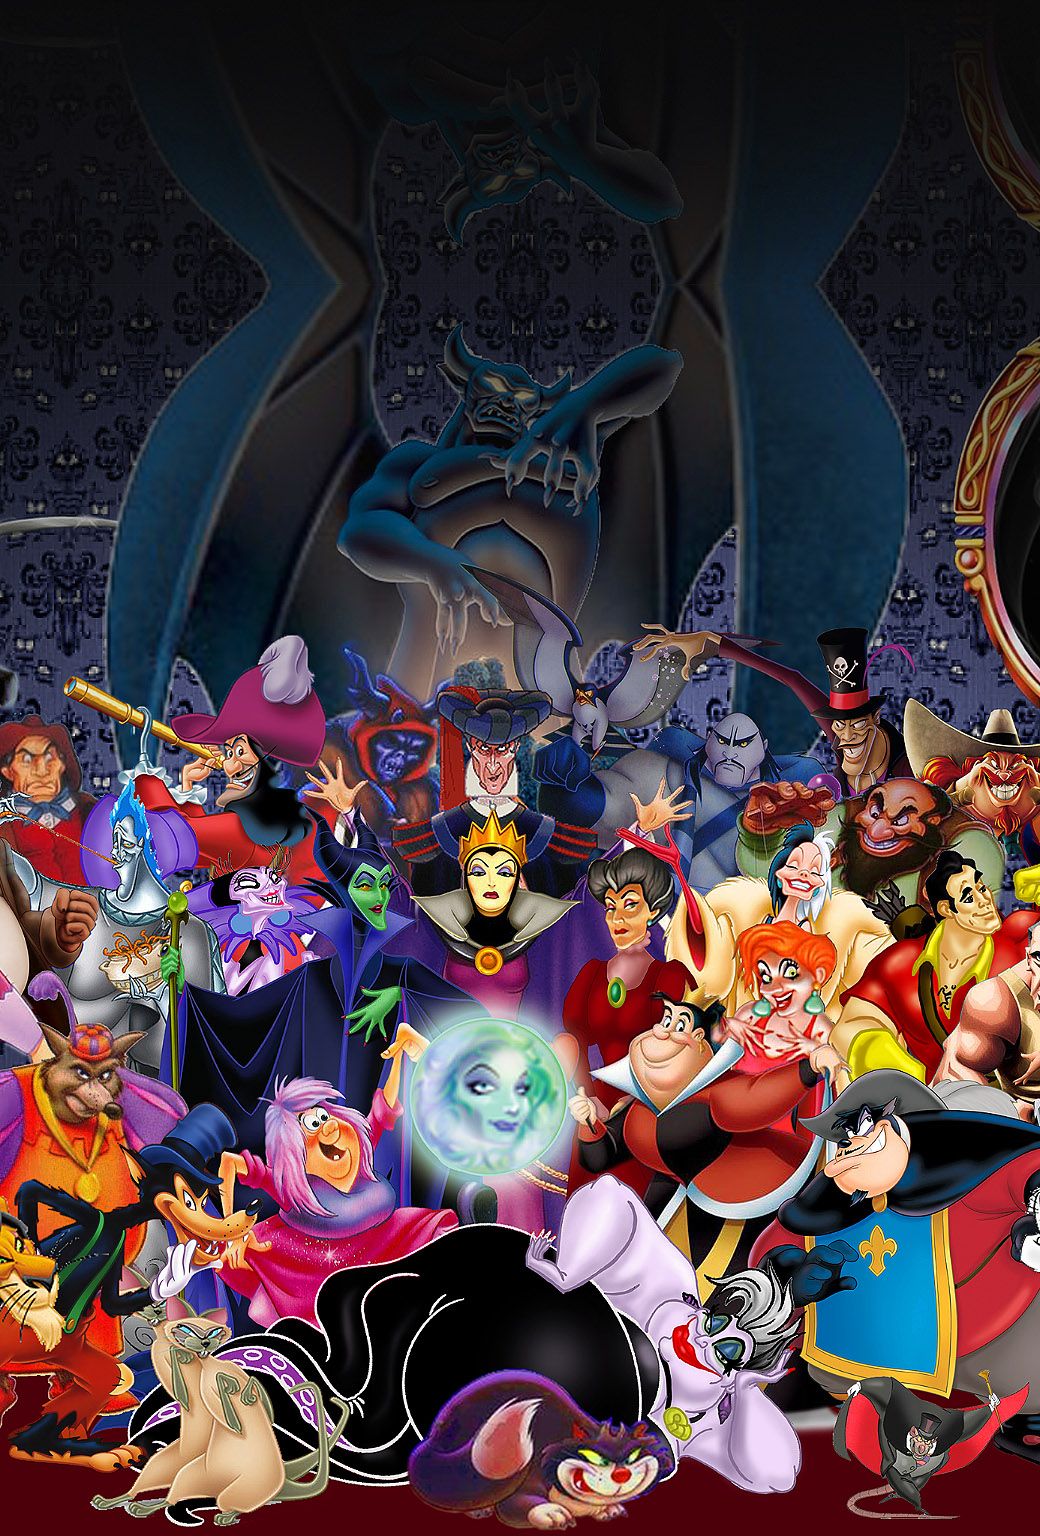 Disney Villains Wallpapers